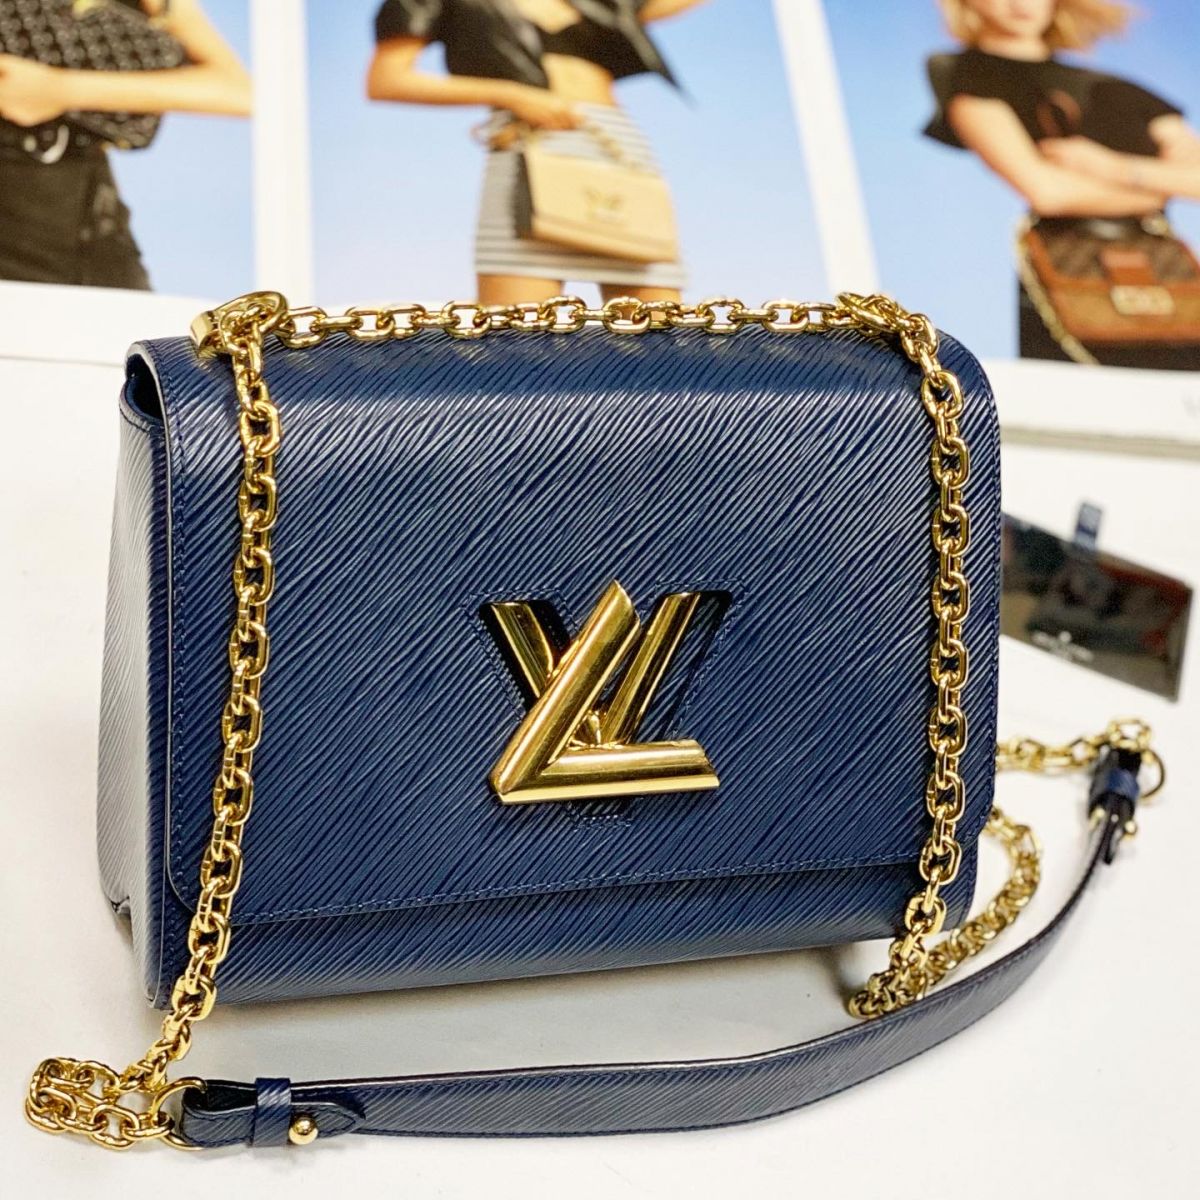 Сумка Louis Vuitton размер 23/17 цена 153 847 руб 